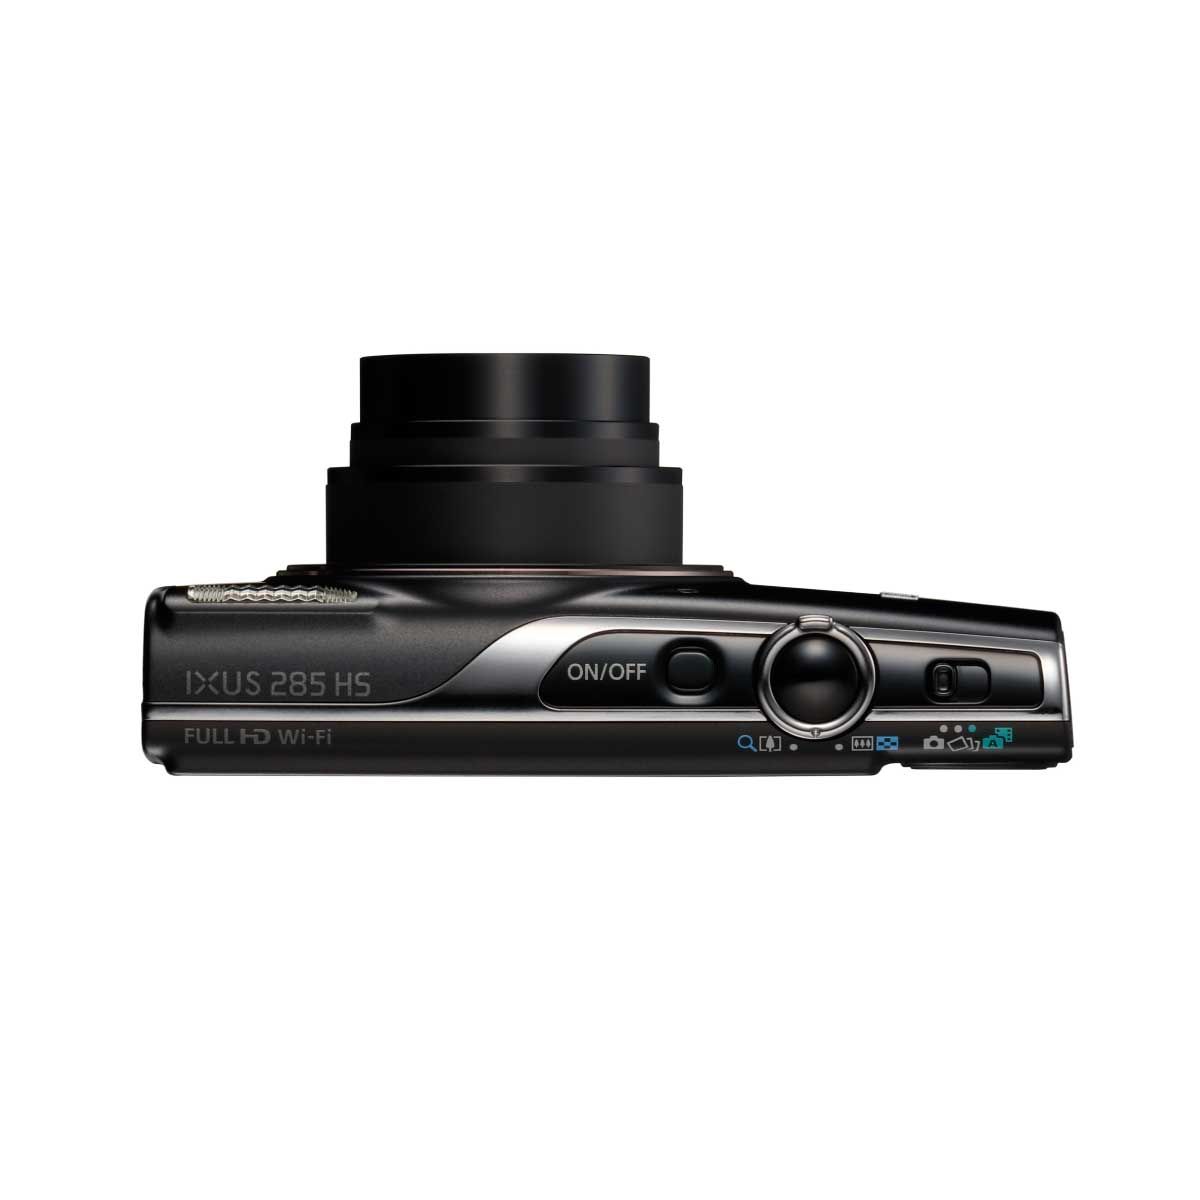 CANON Digital Compact Camera รุ่น IXUS 285HS สีดำ